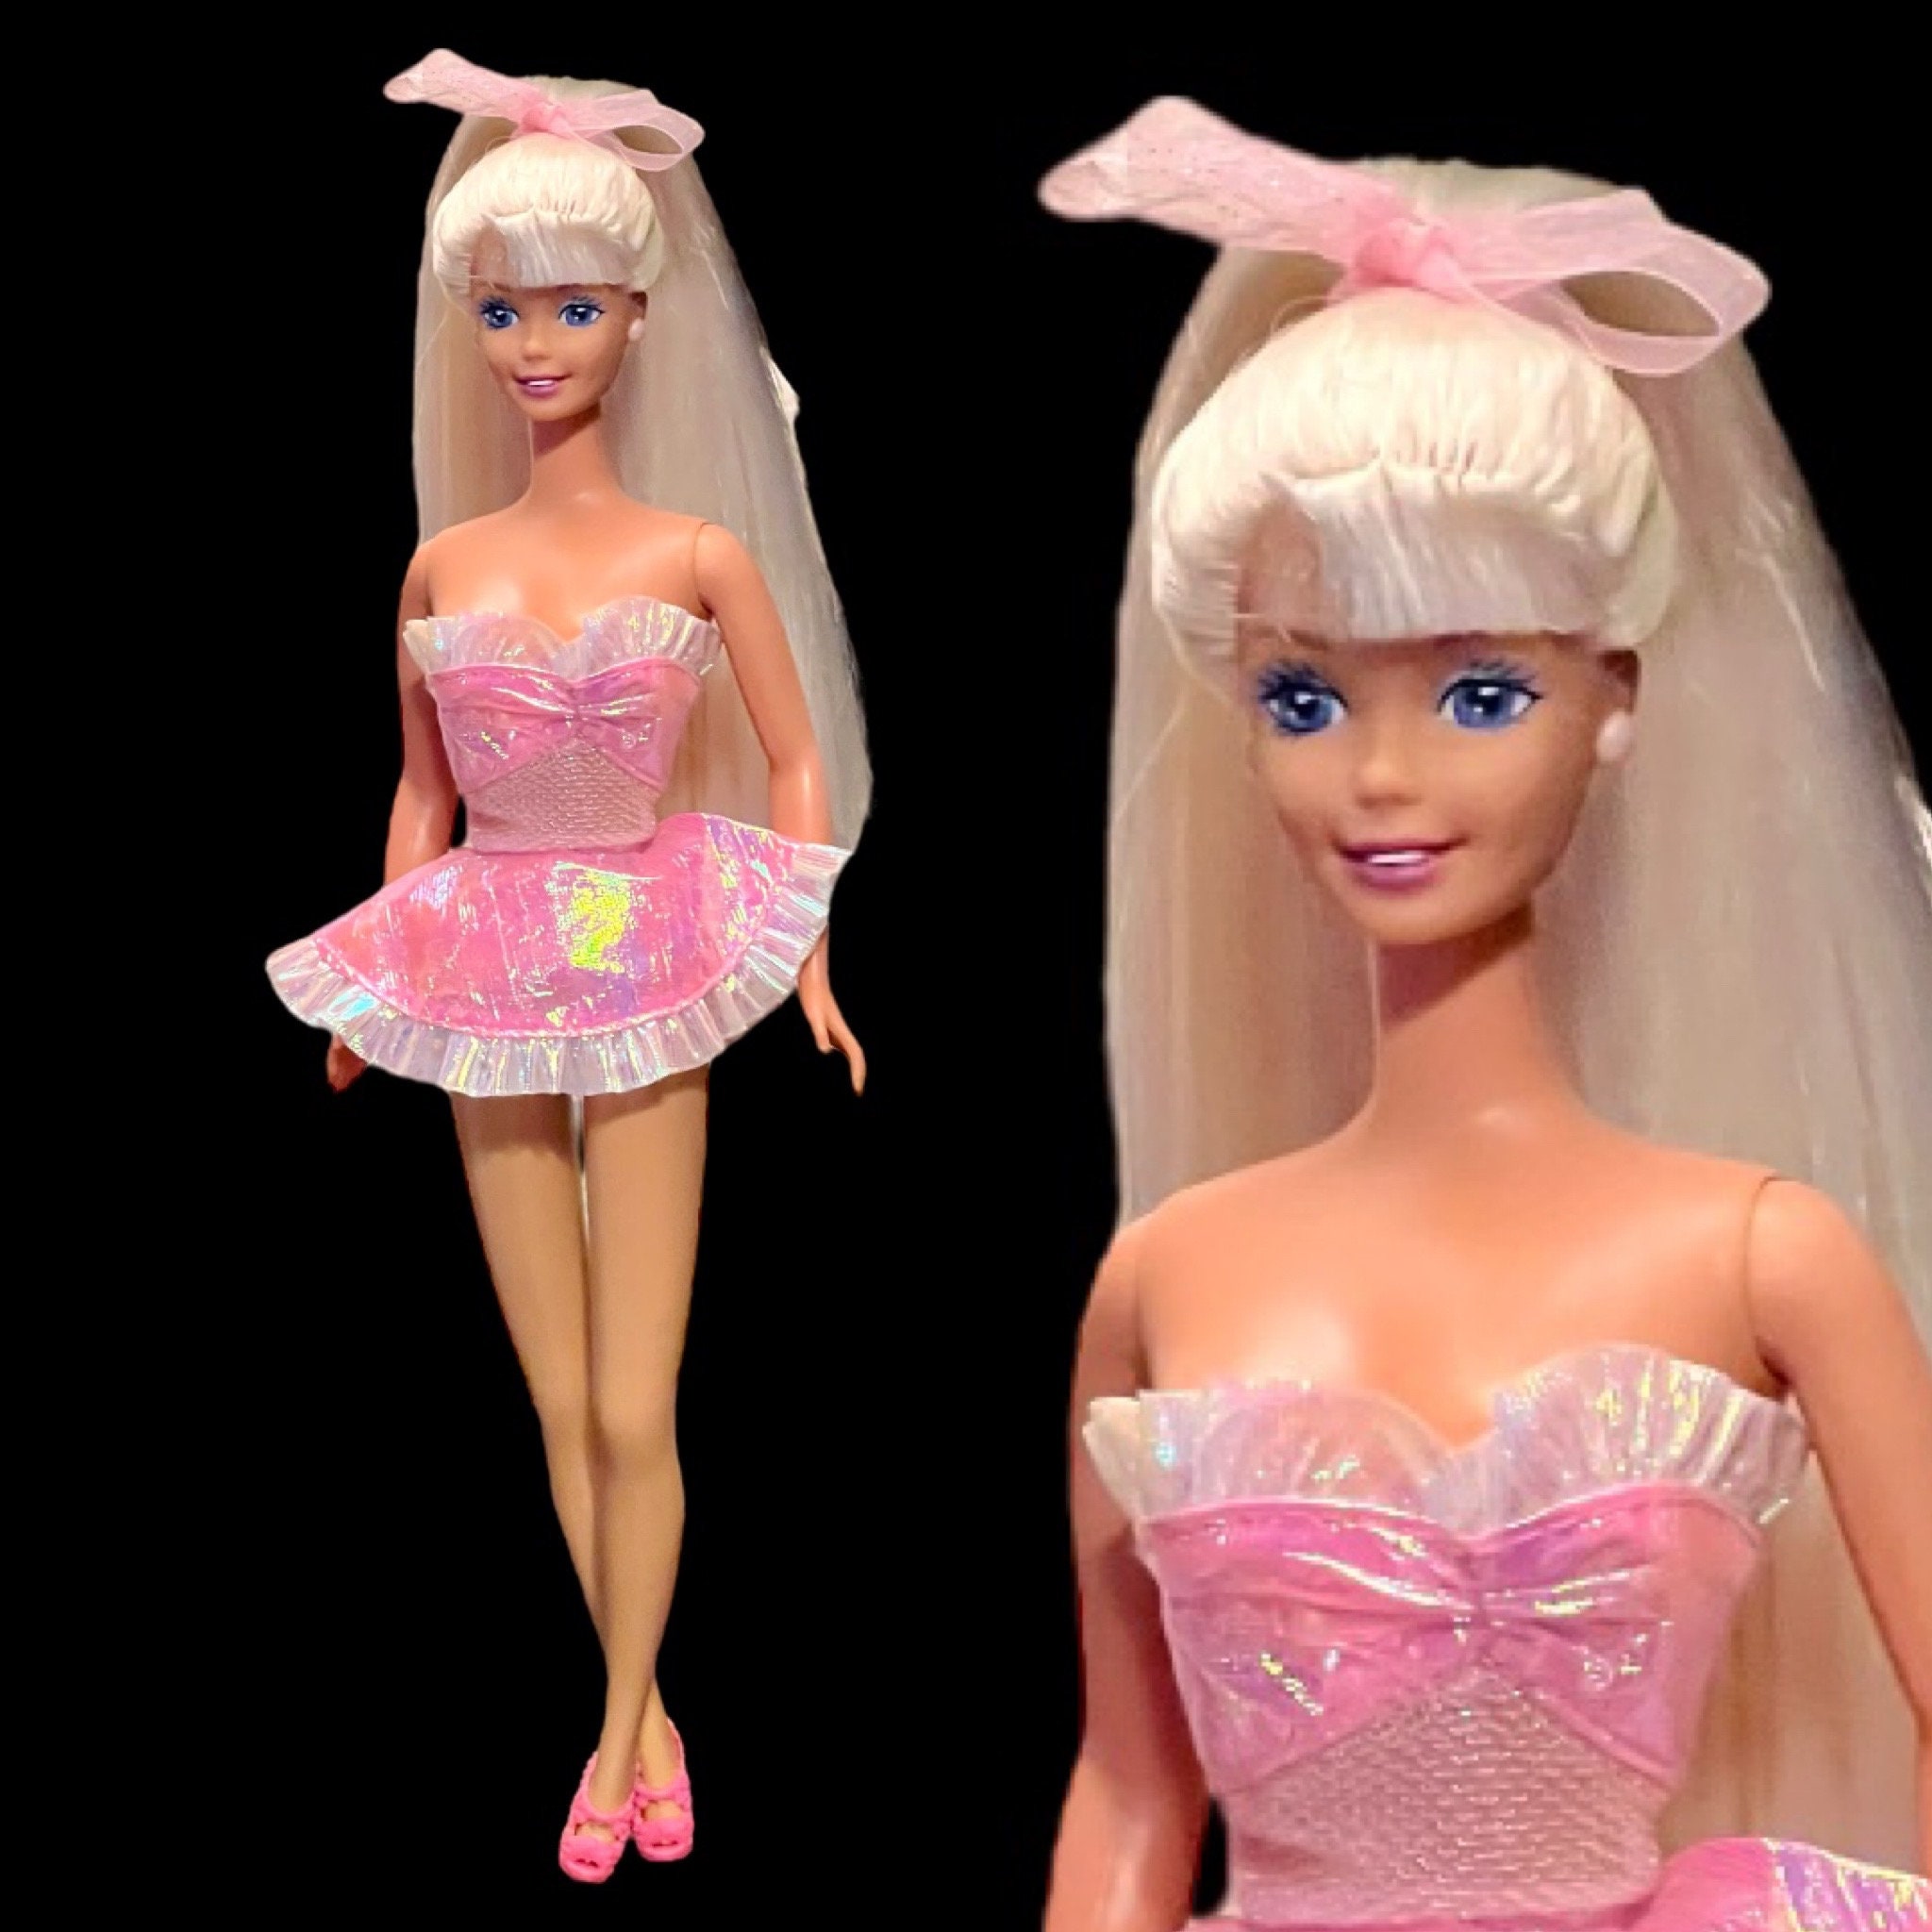 Barbie バービー So In Style Kara Doll 2012 人形 ドール